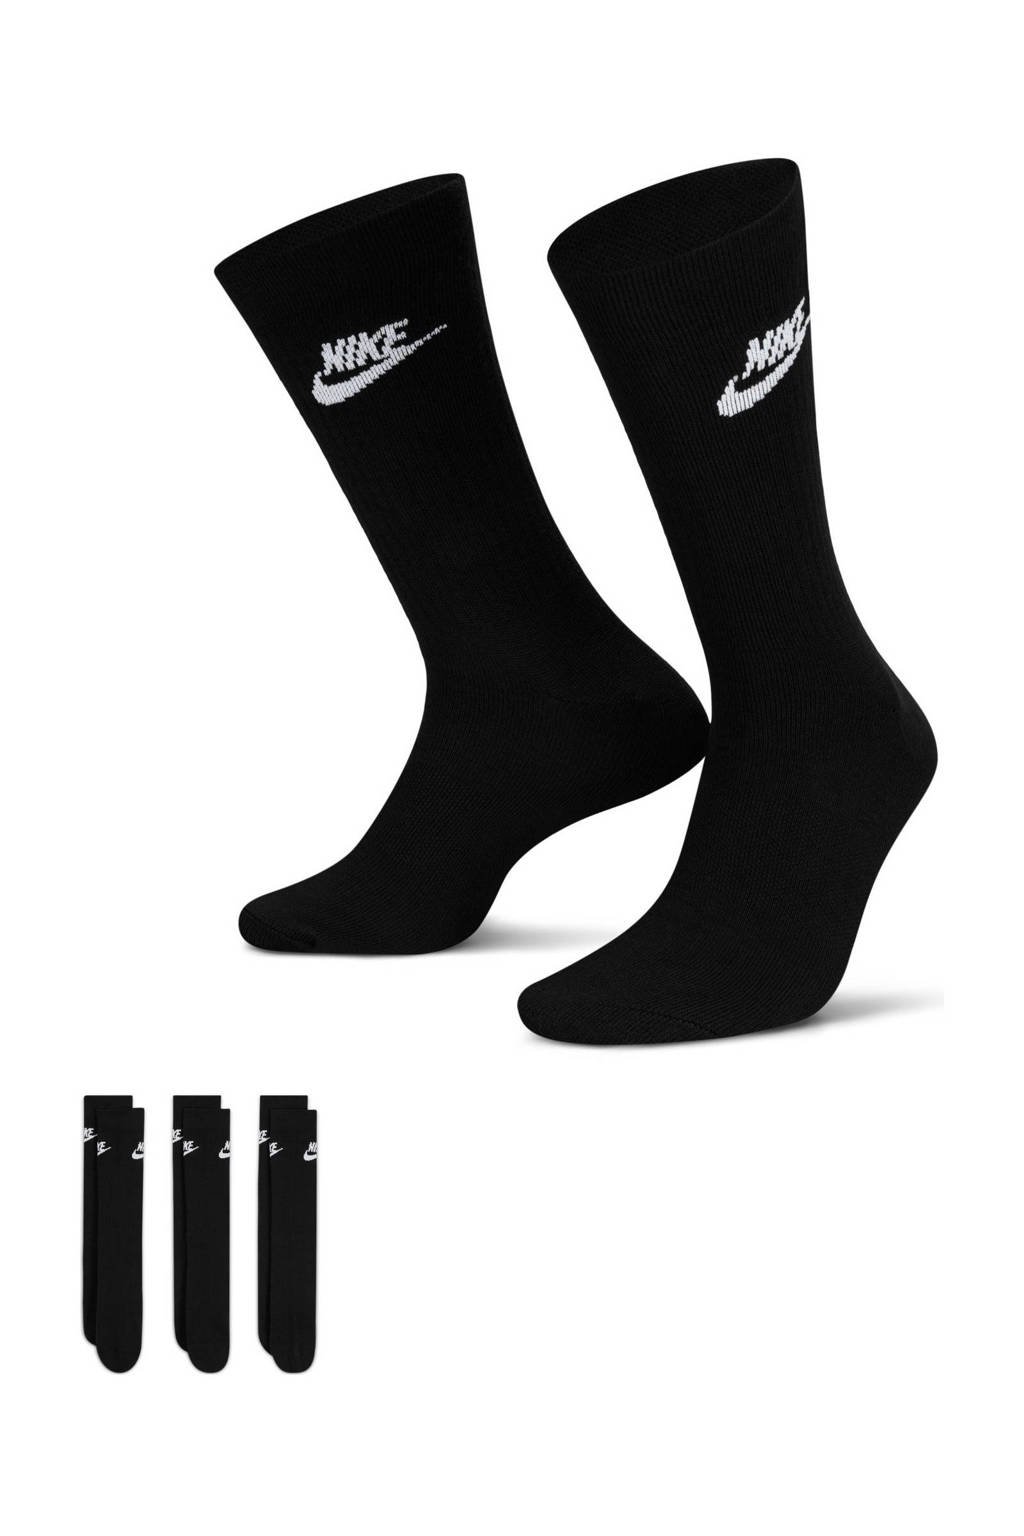 Nike Senior  sportsokken - set van 3 zwart/wit, Zwart/wit